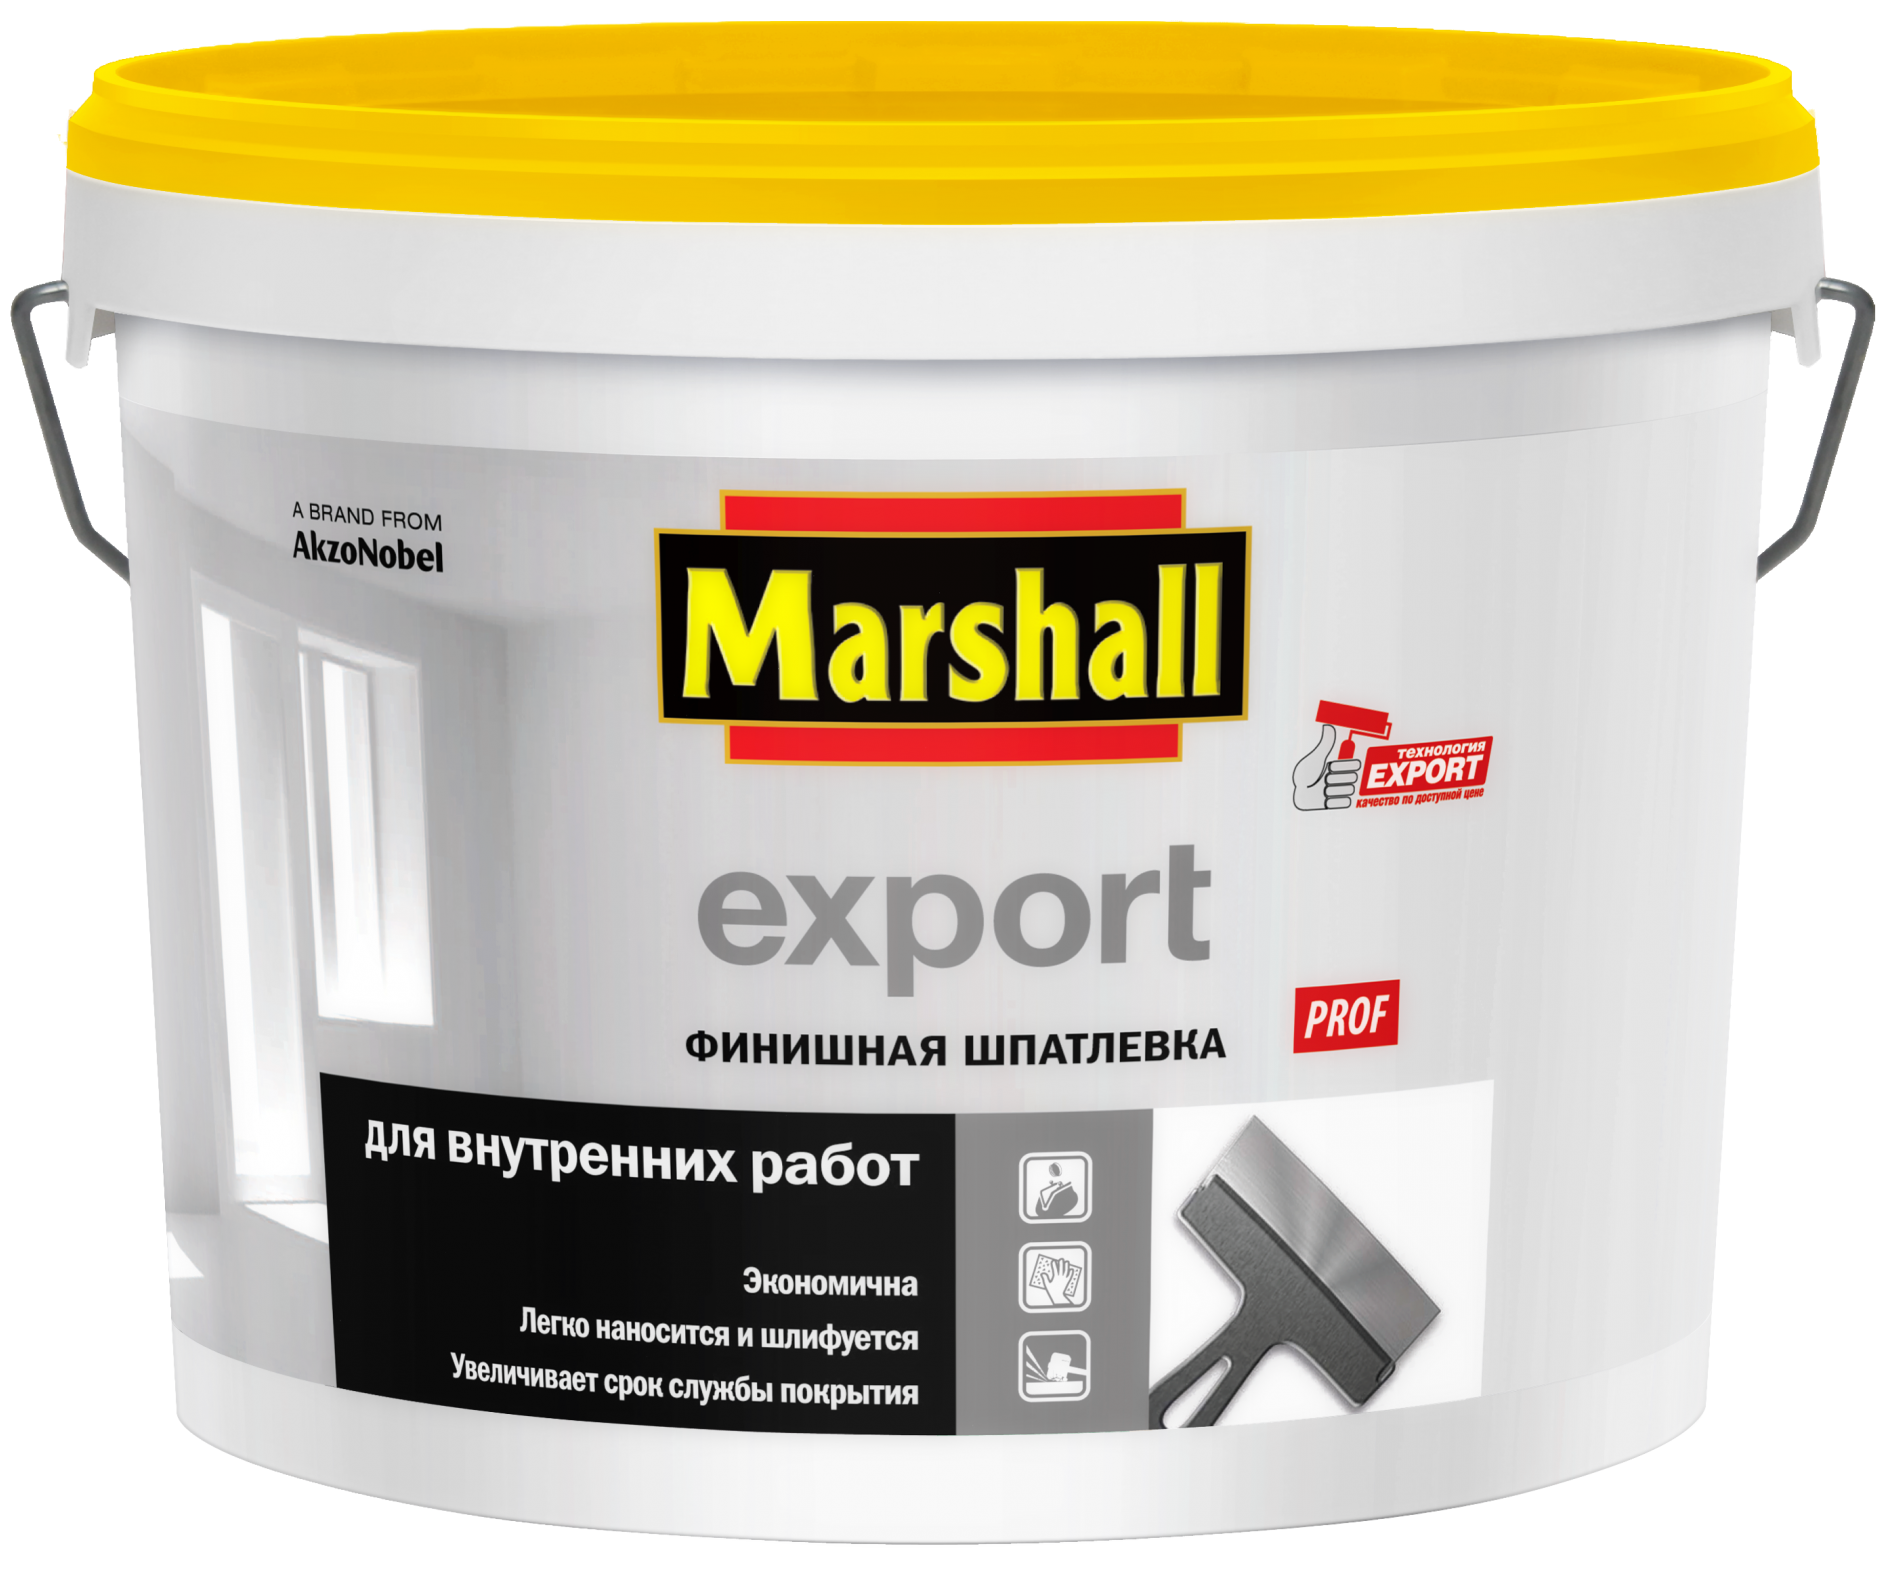 Купить Шпатлевка Marshall Export, 10 л